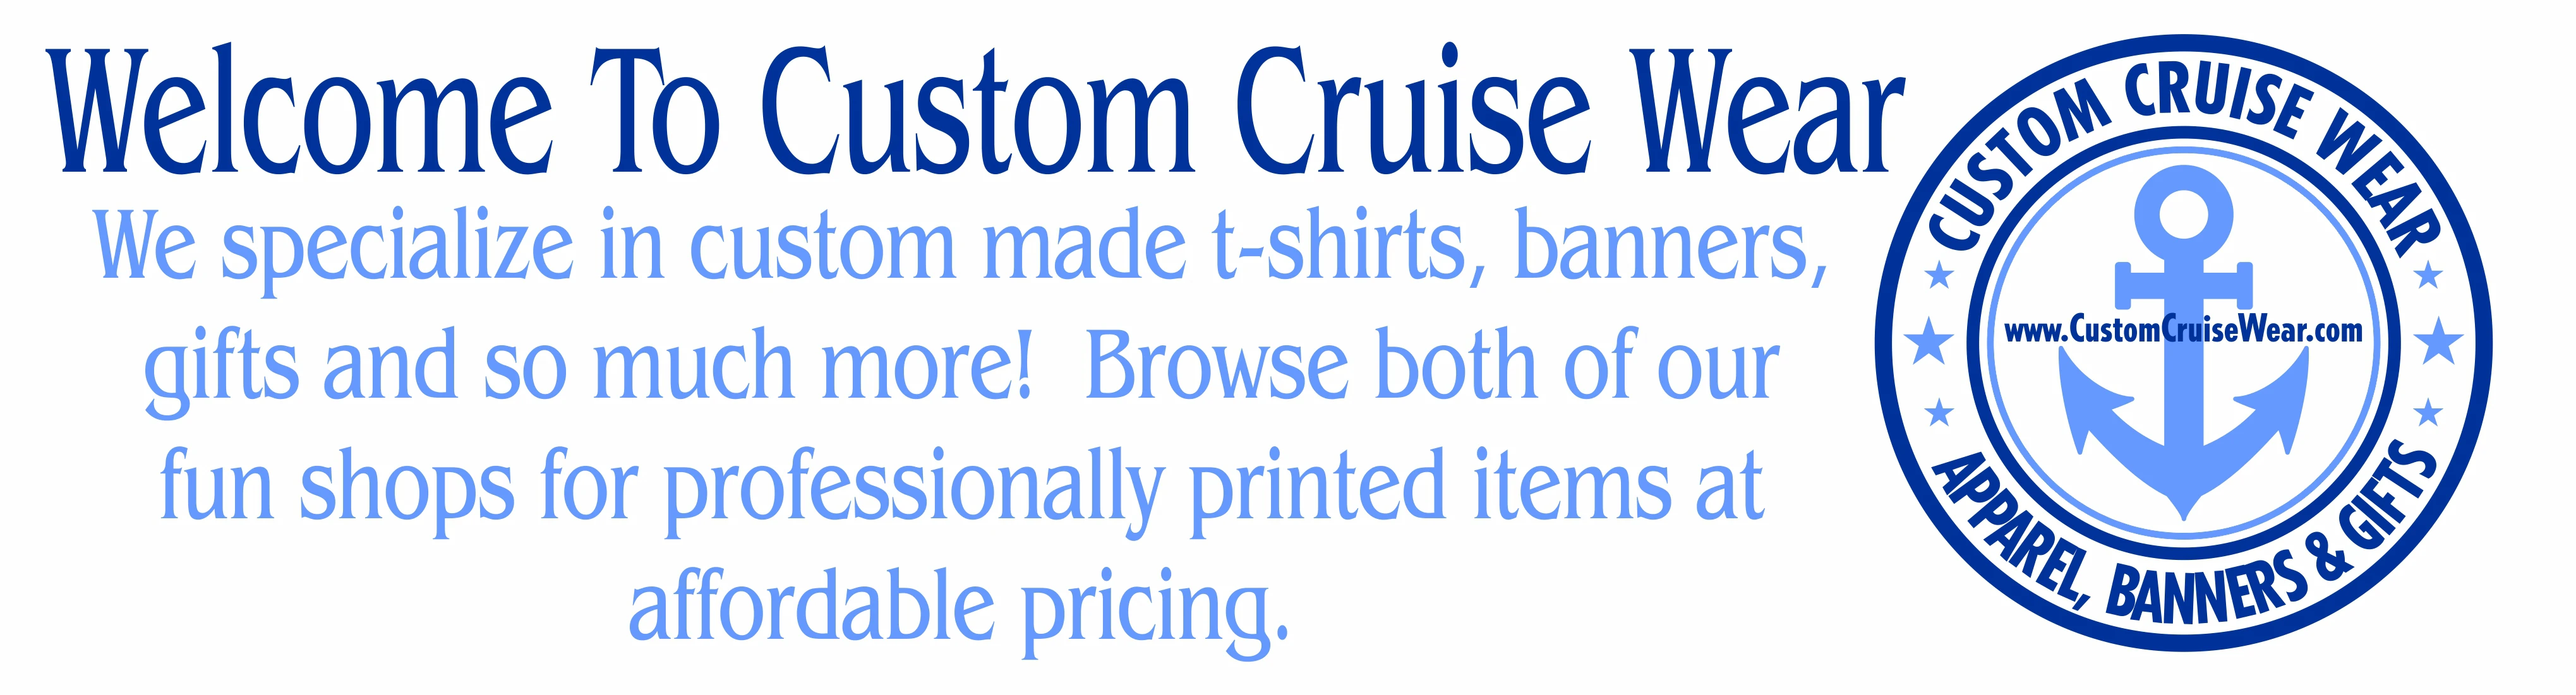 customcruisewear.com